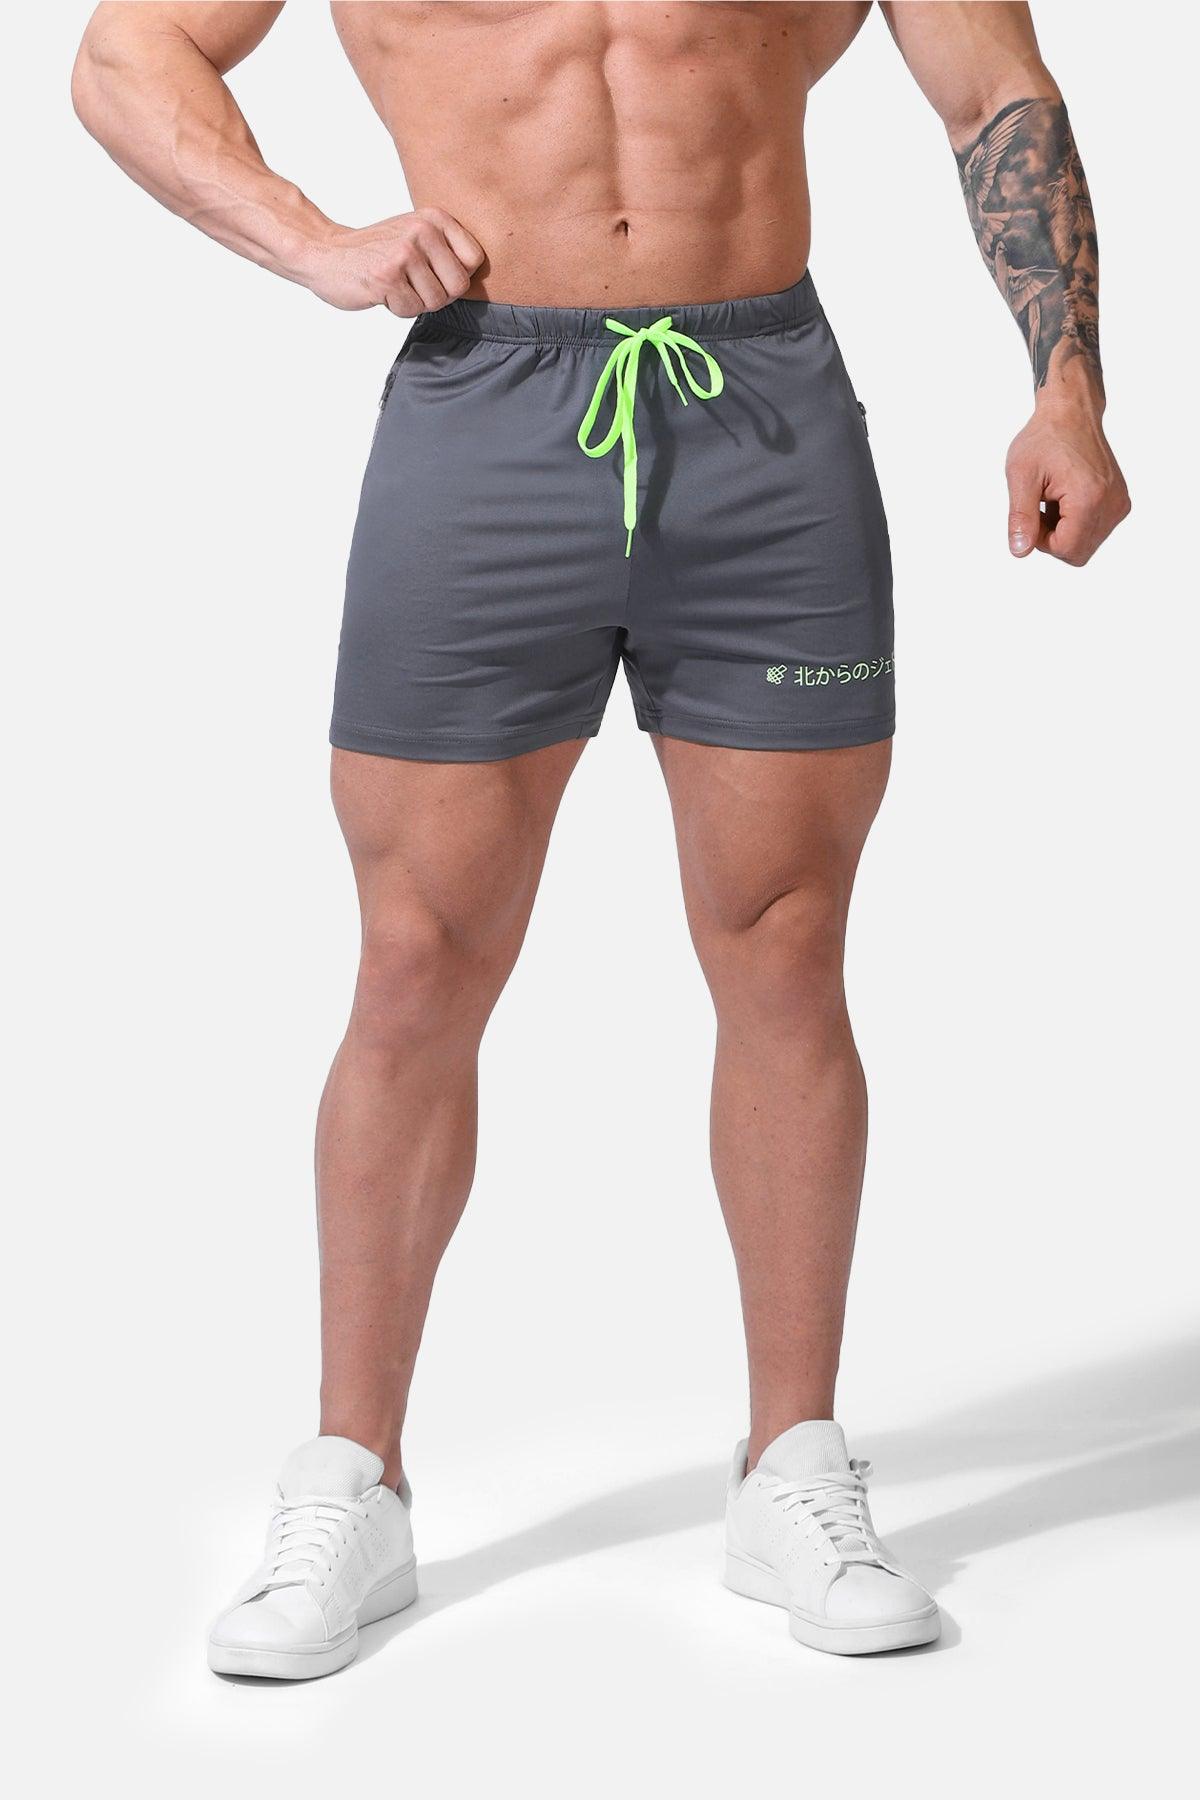 Agile Bodybuilding 4'' Shorts w Zipper Pockets - Japanese Gray - Jed North Canada